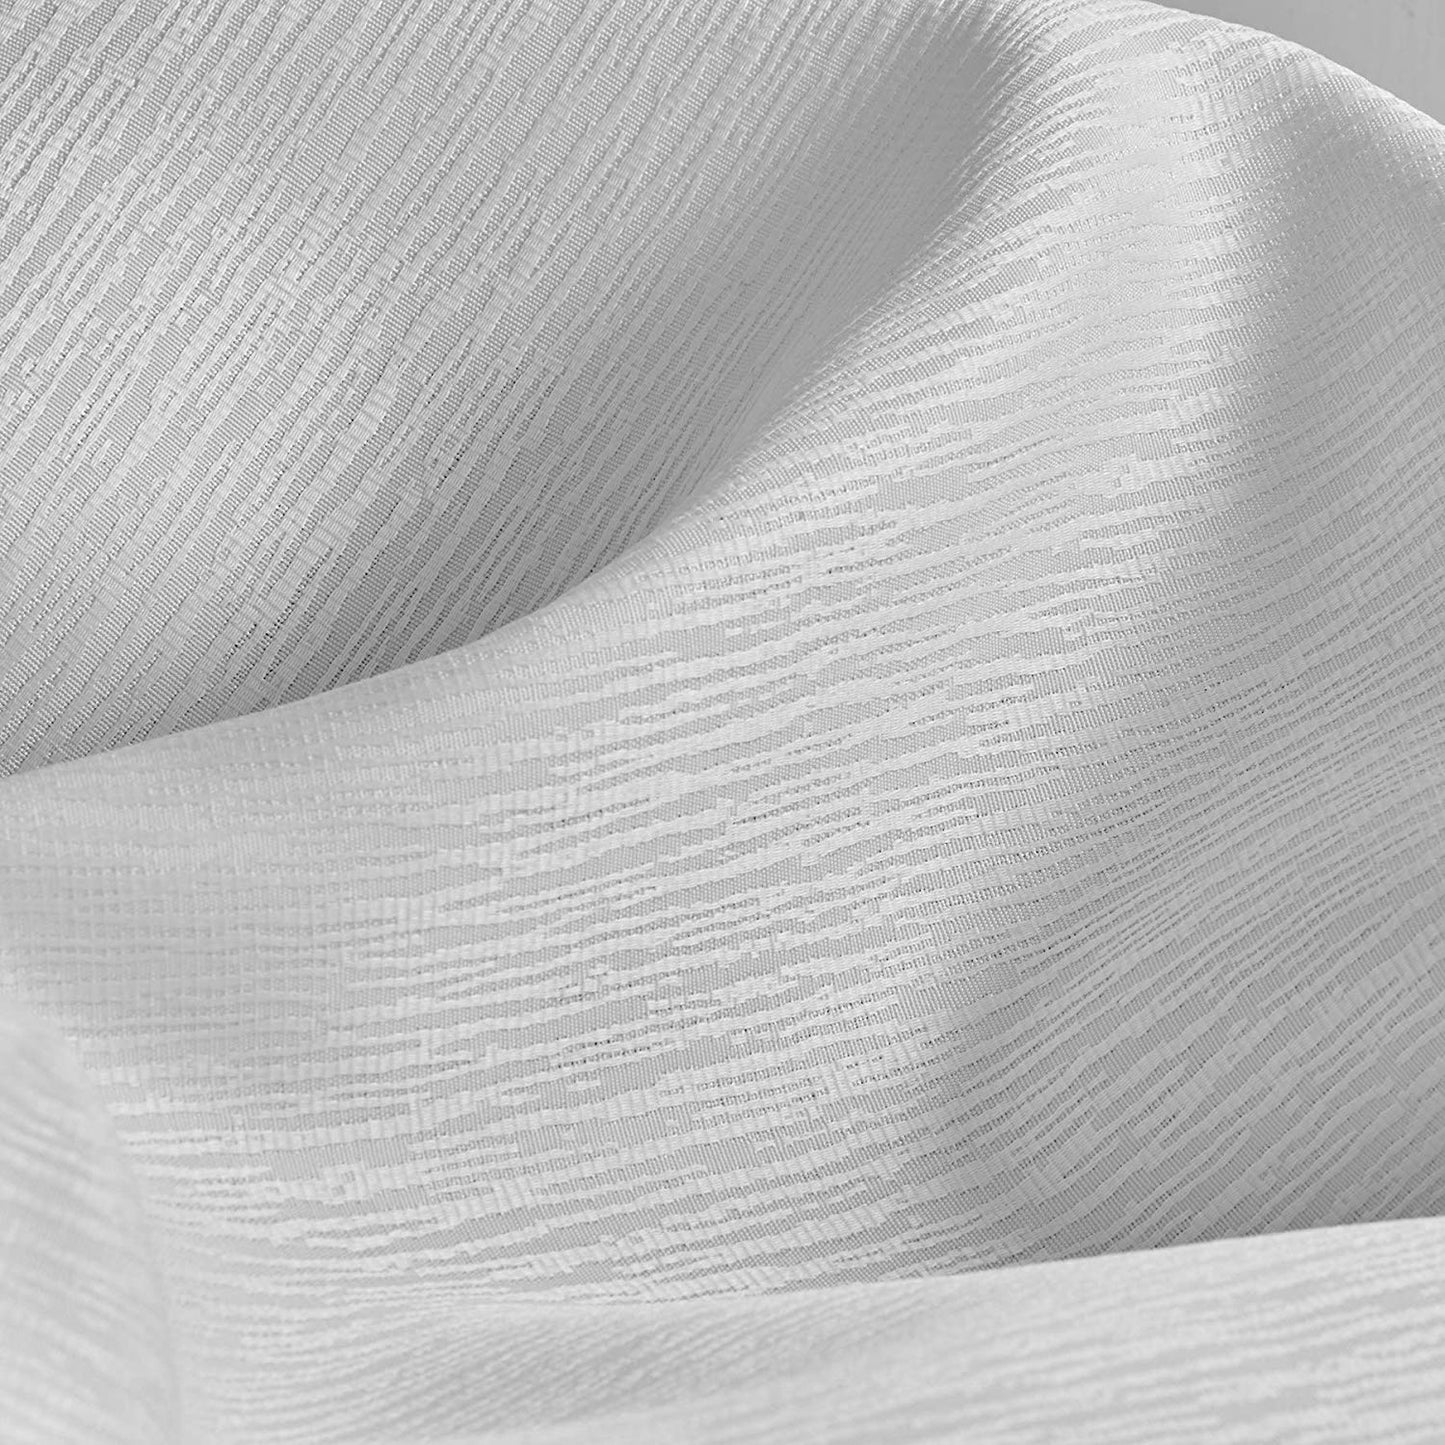 Cesena Fabric Tablecloth